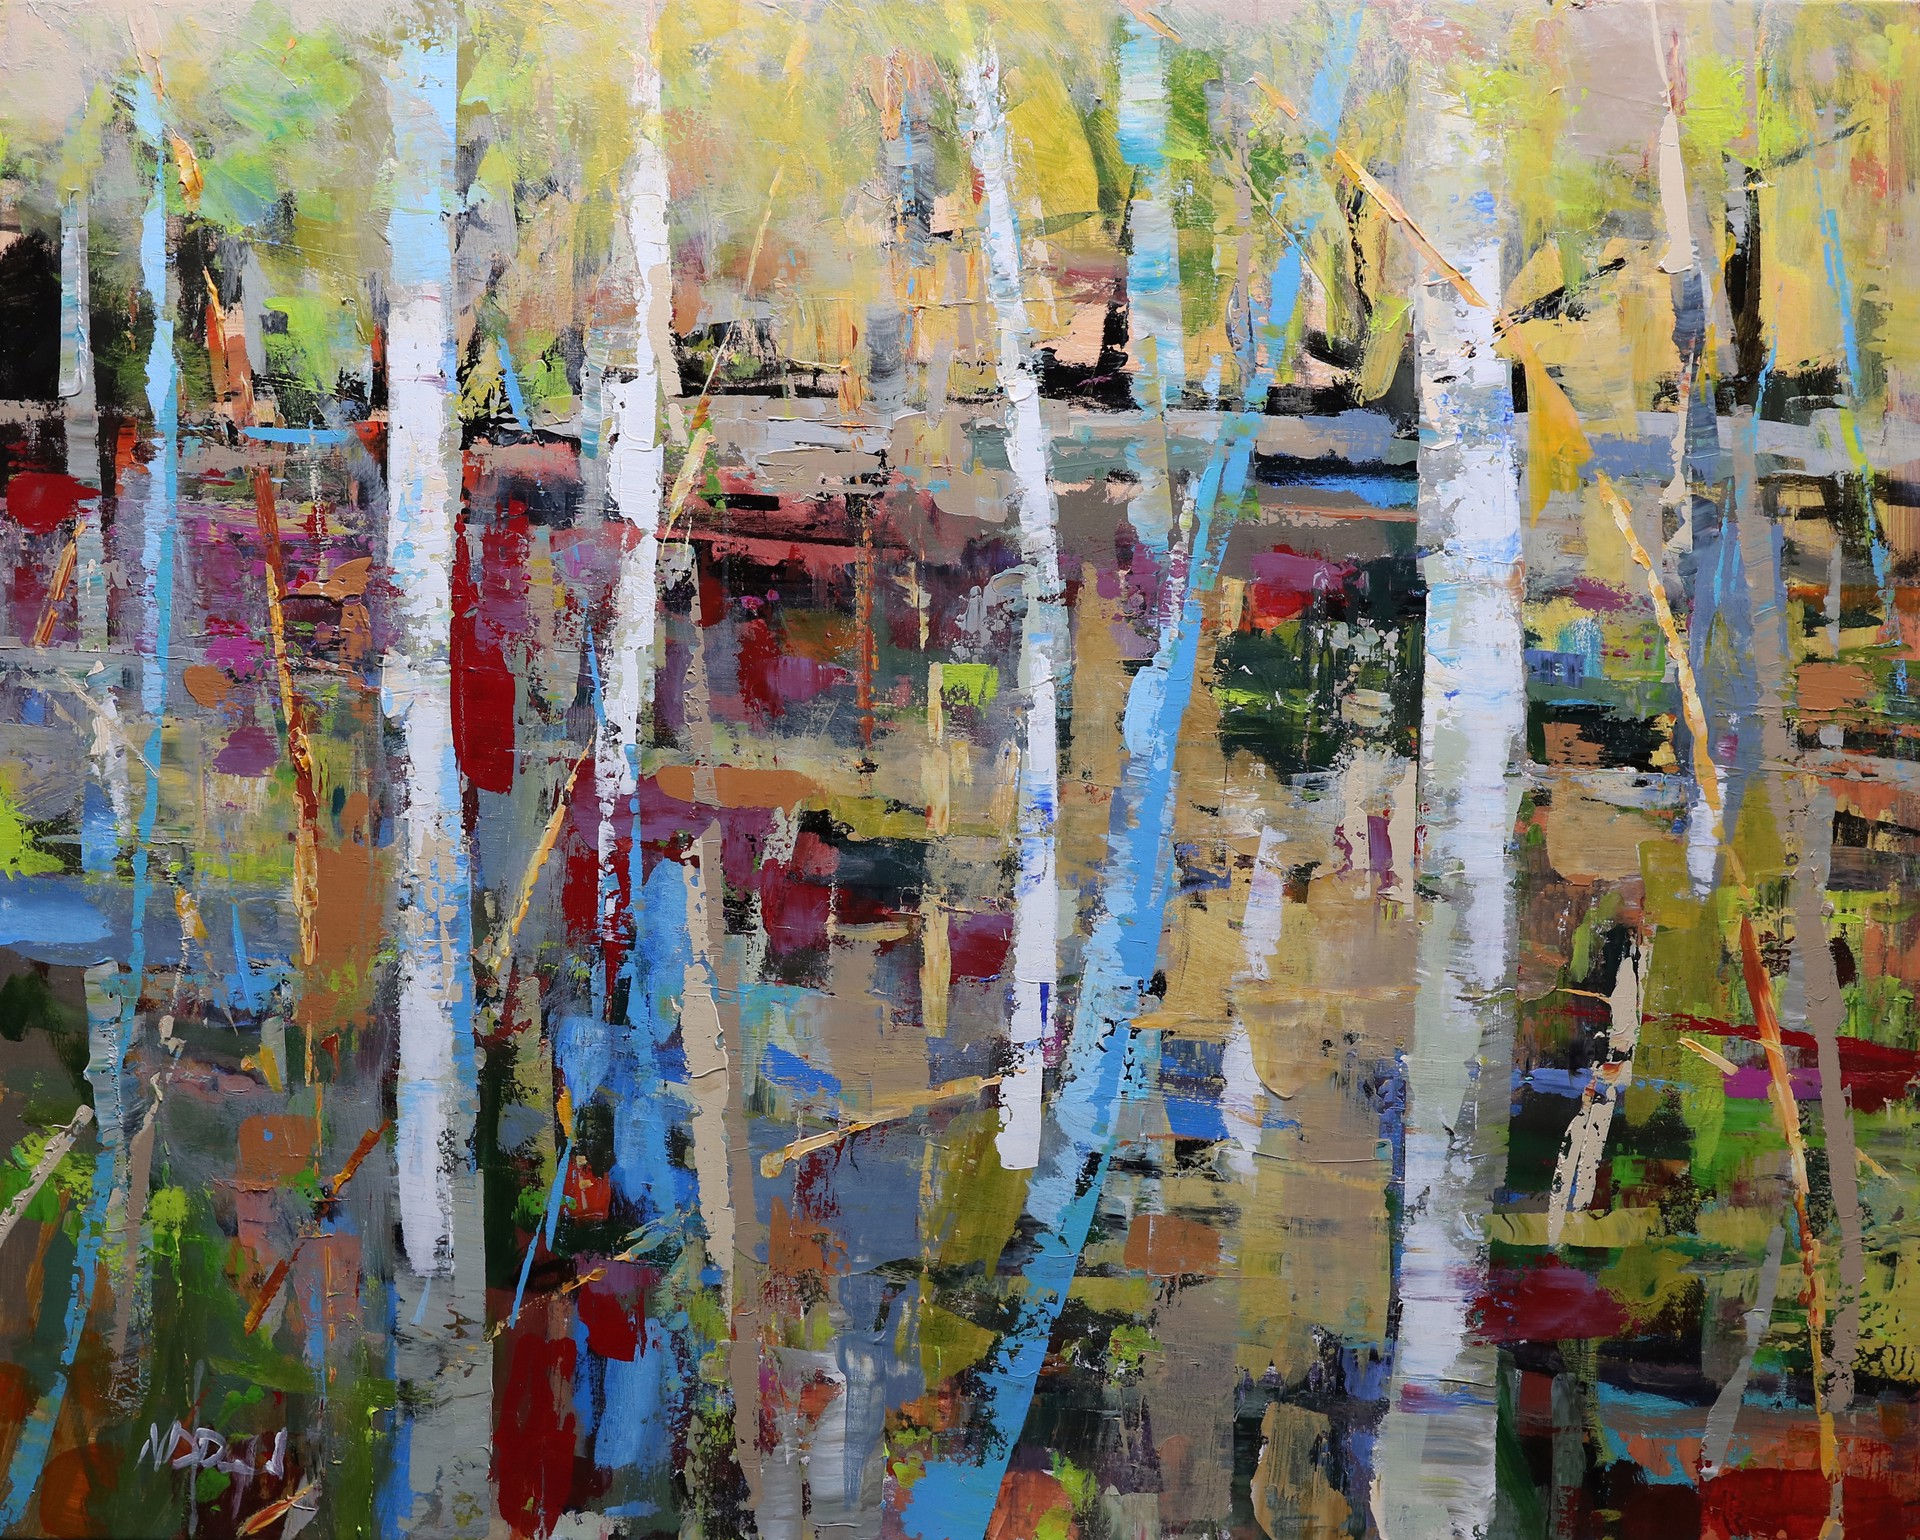 "Through the Trees" original oil painting by Noah Desmond